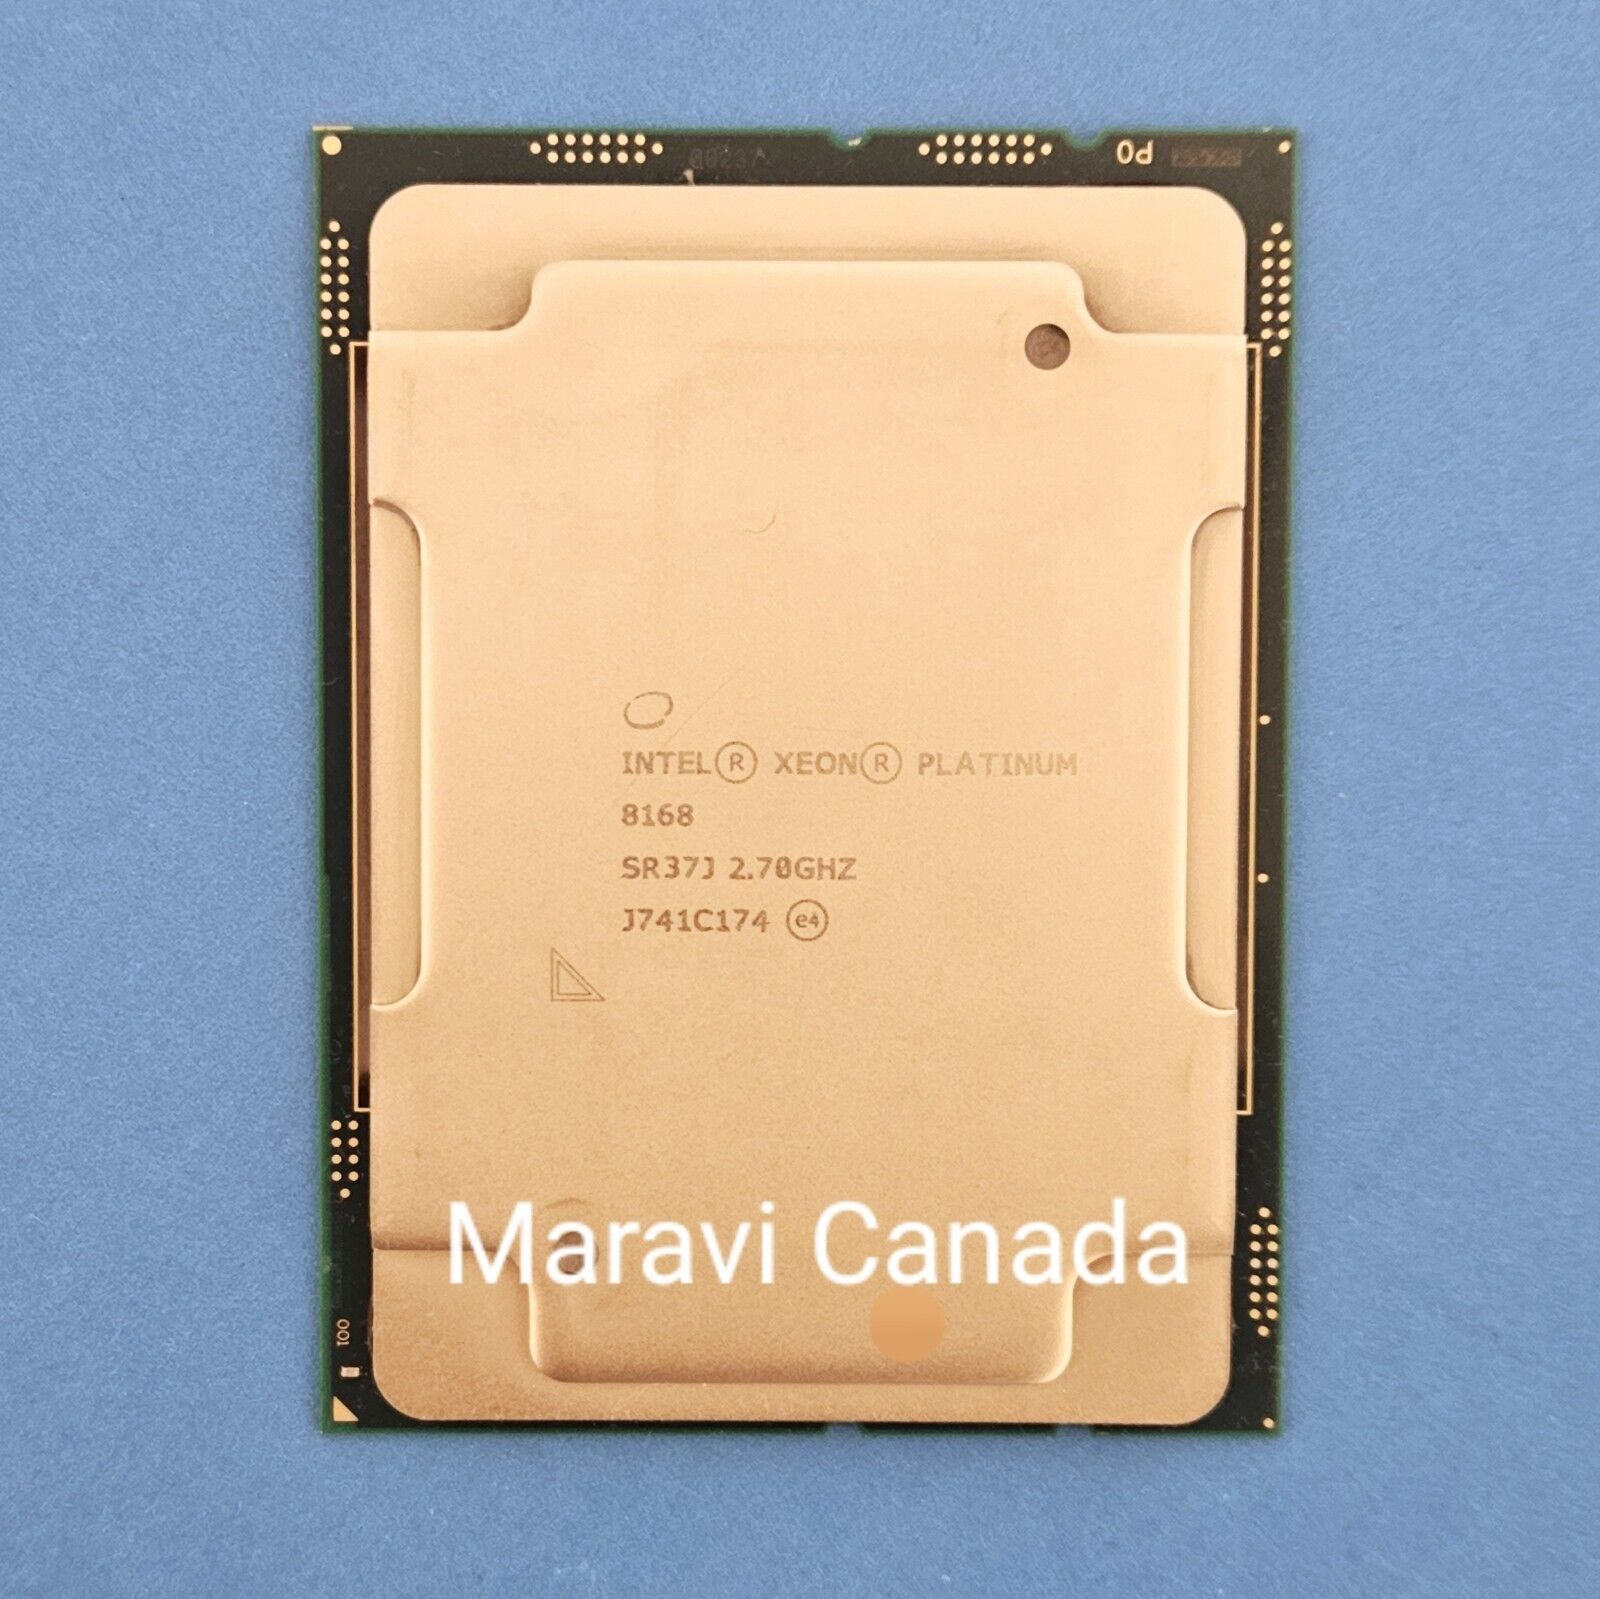 SR37J Intel Xeon Platinum 8168 24-Core 2.70GHz 33MB 205W CPU Processor Grade A